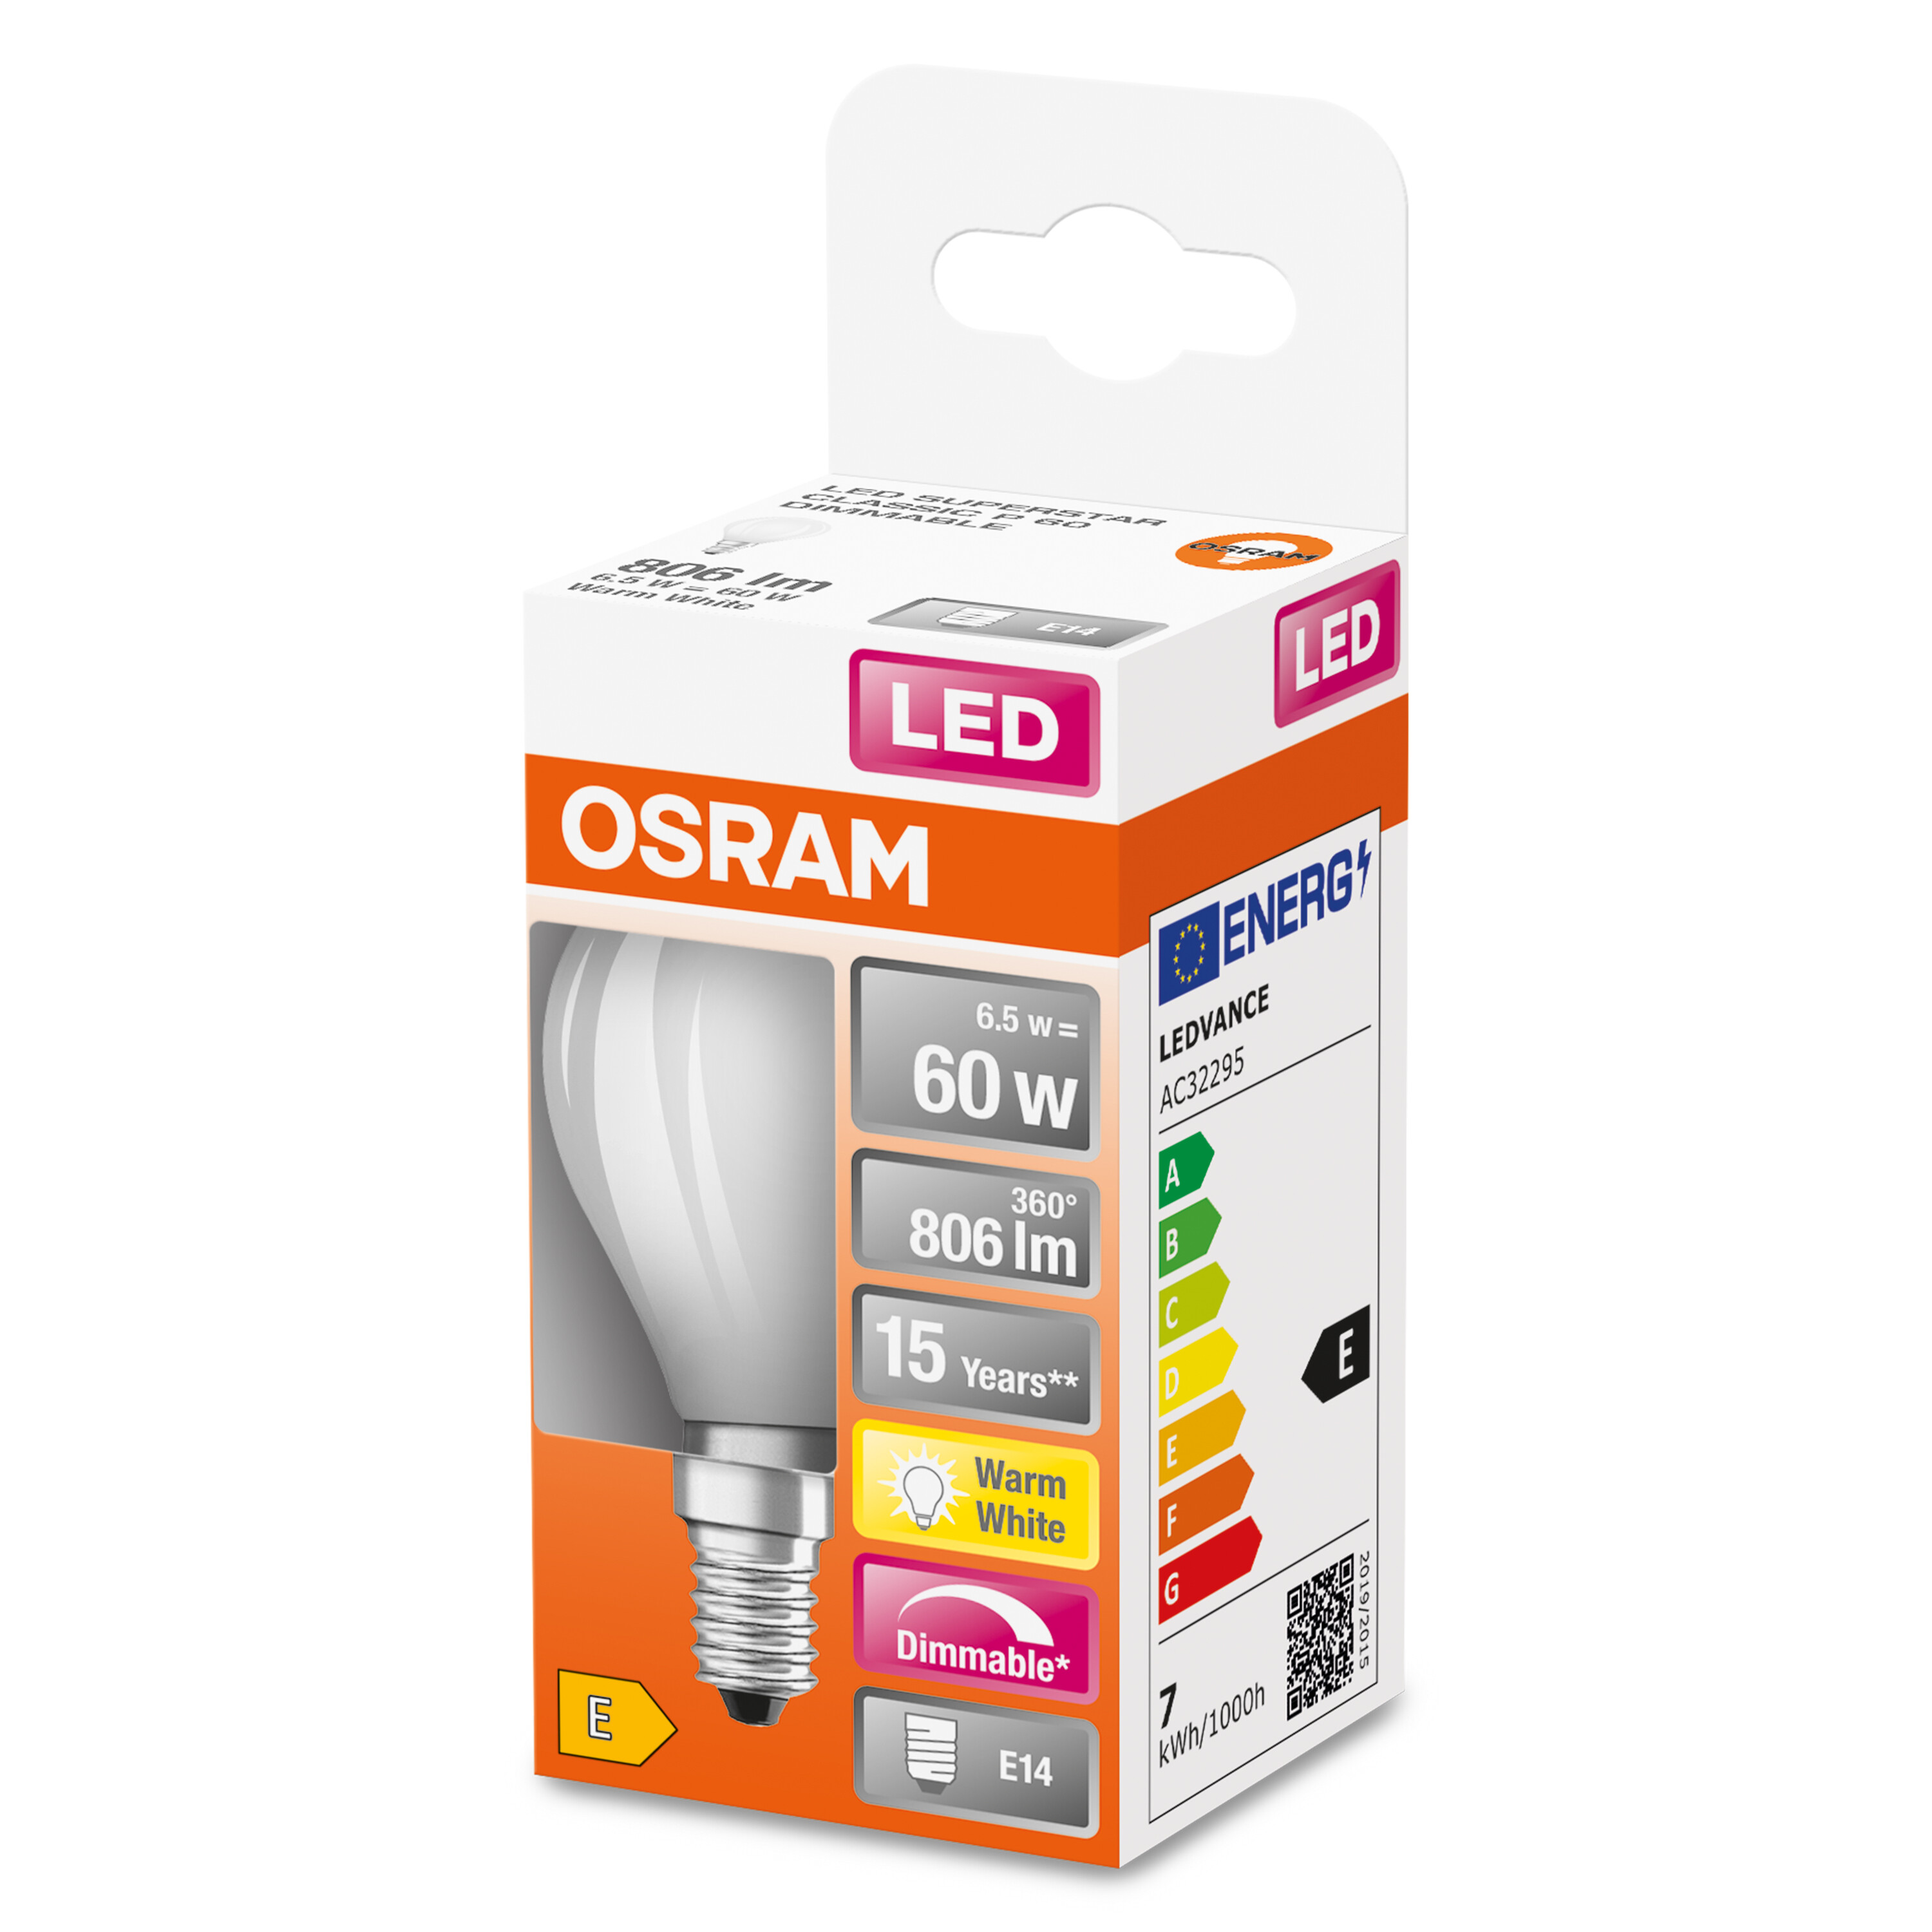 OSRAM  LED Retrofit Lumen LED P DIM CLASSIC 806 Lampe Warmweiß